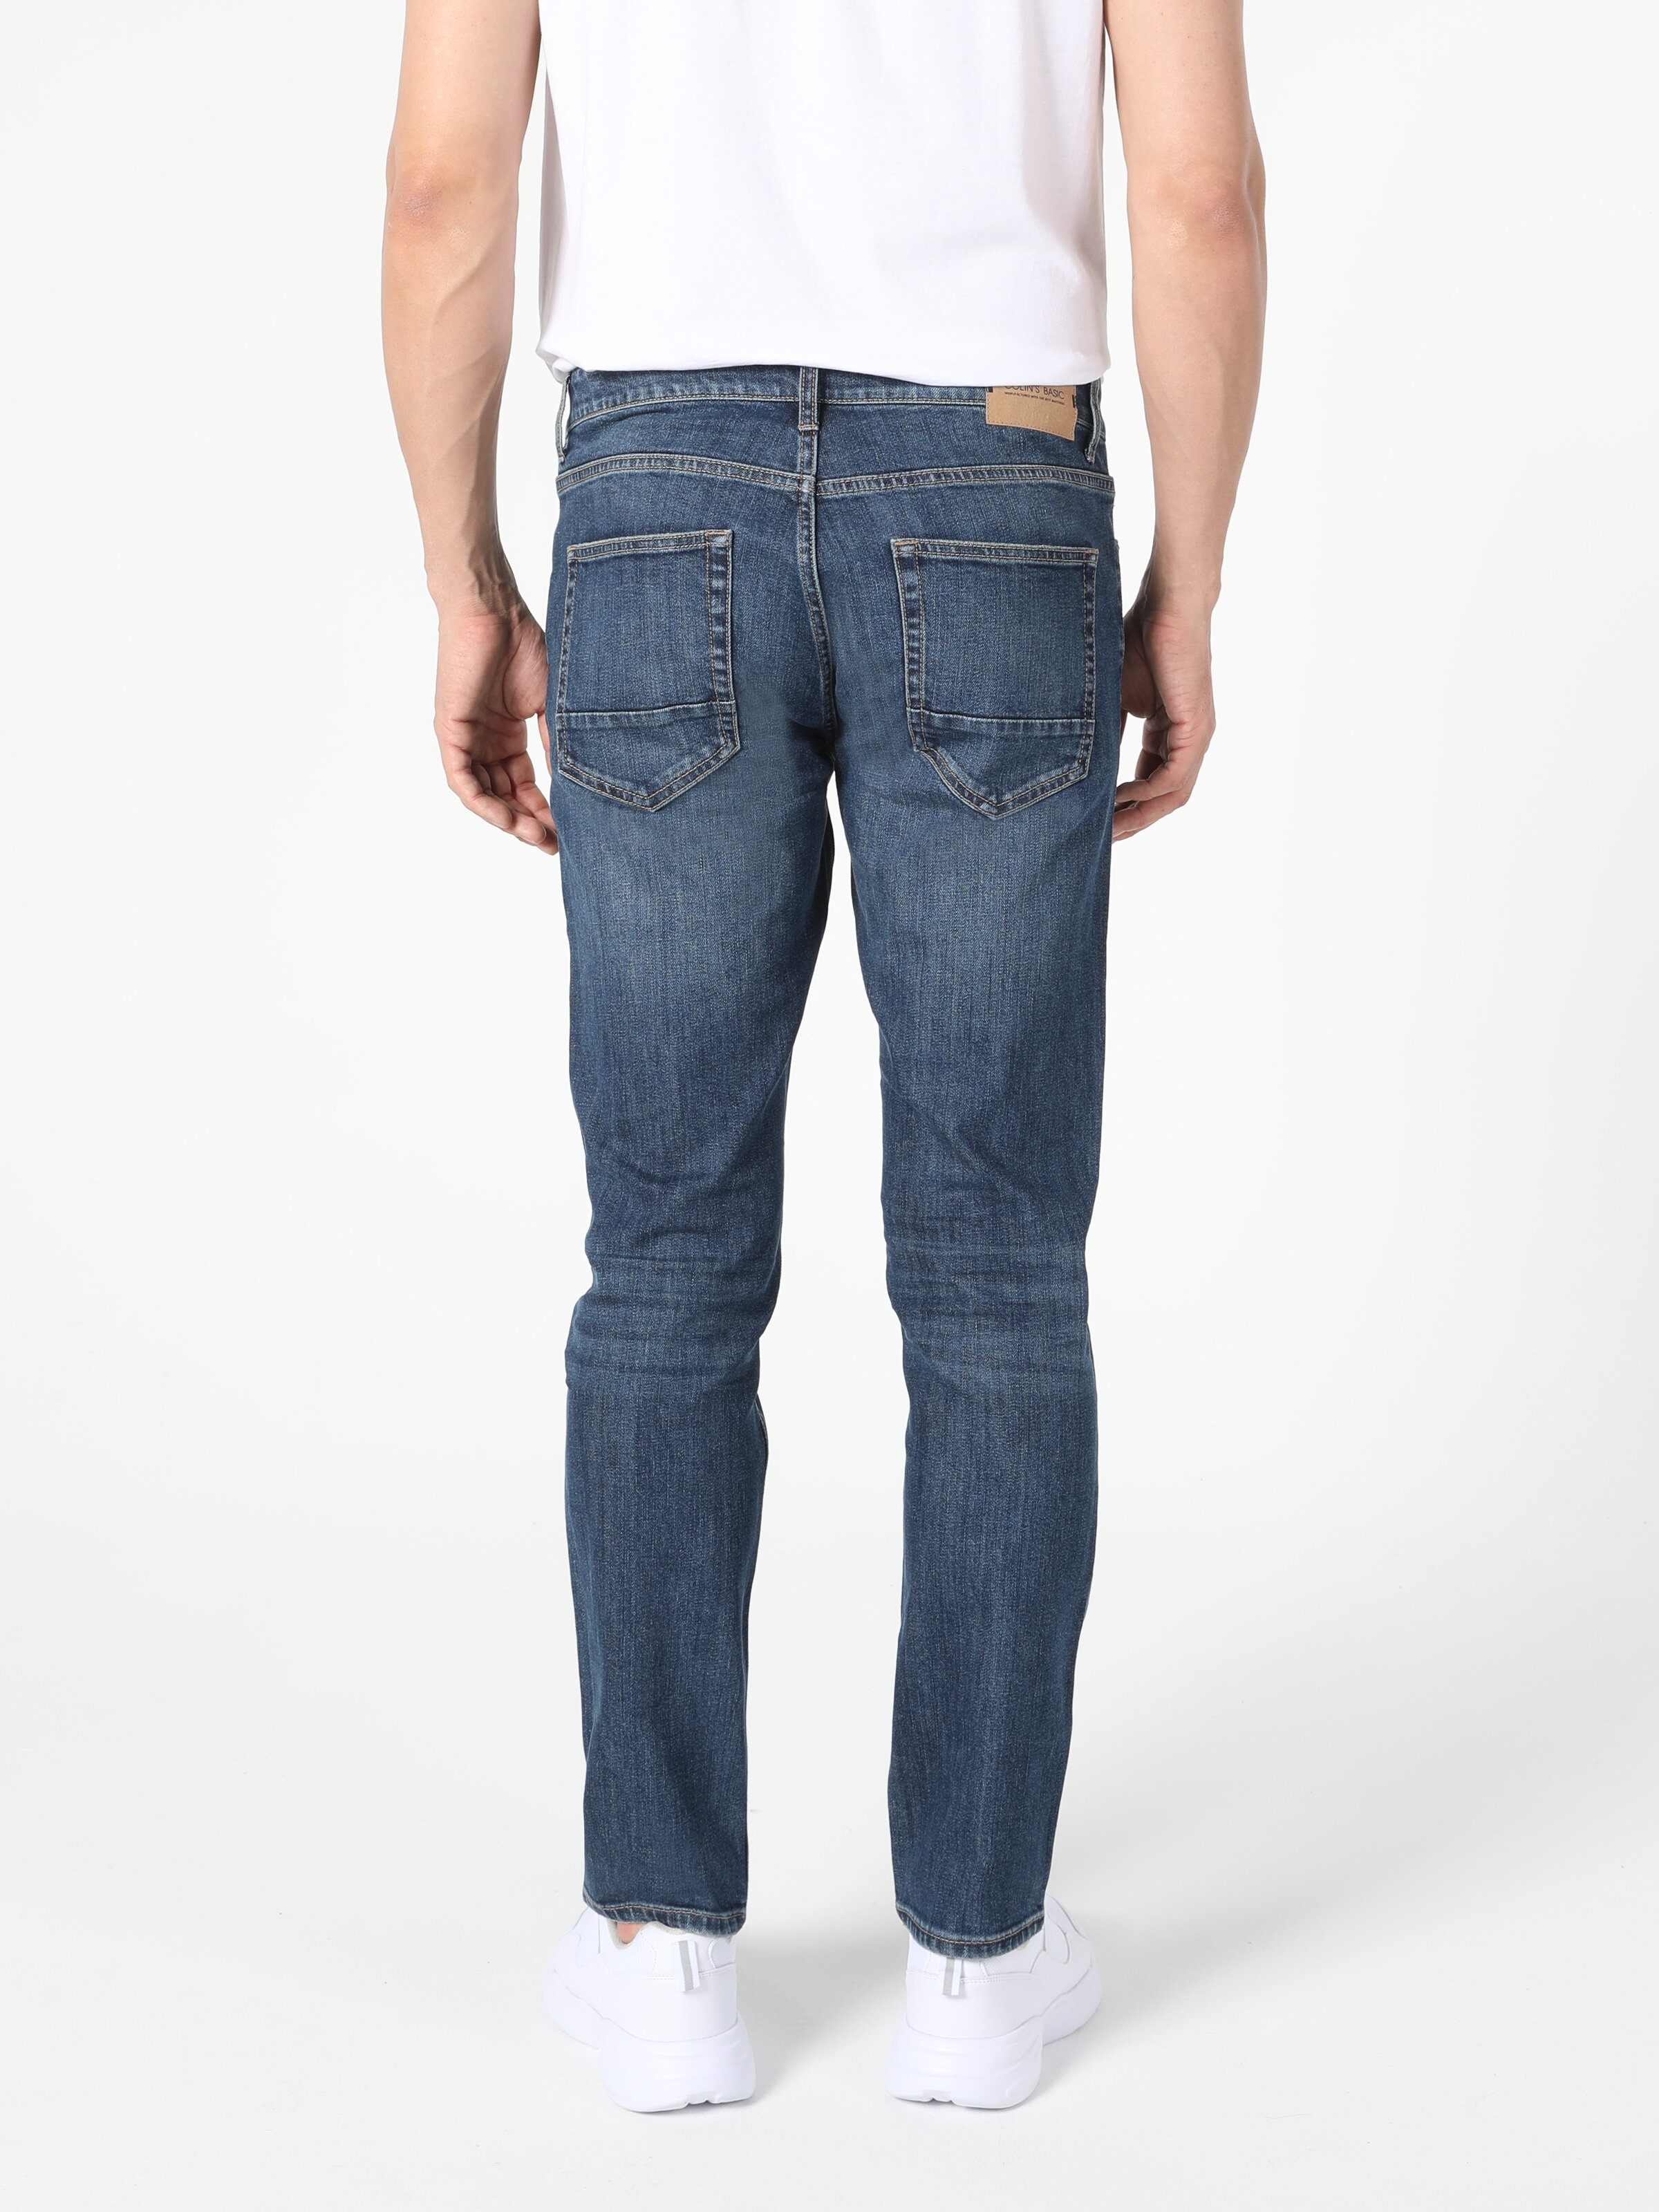 Afișați detalii pentru Pantaloni De Barbati Albastru Slim Fit-Low Rise-Slim Leg 044 Karl